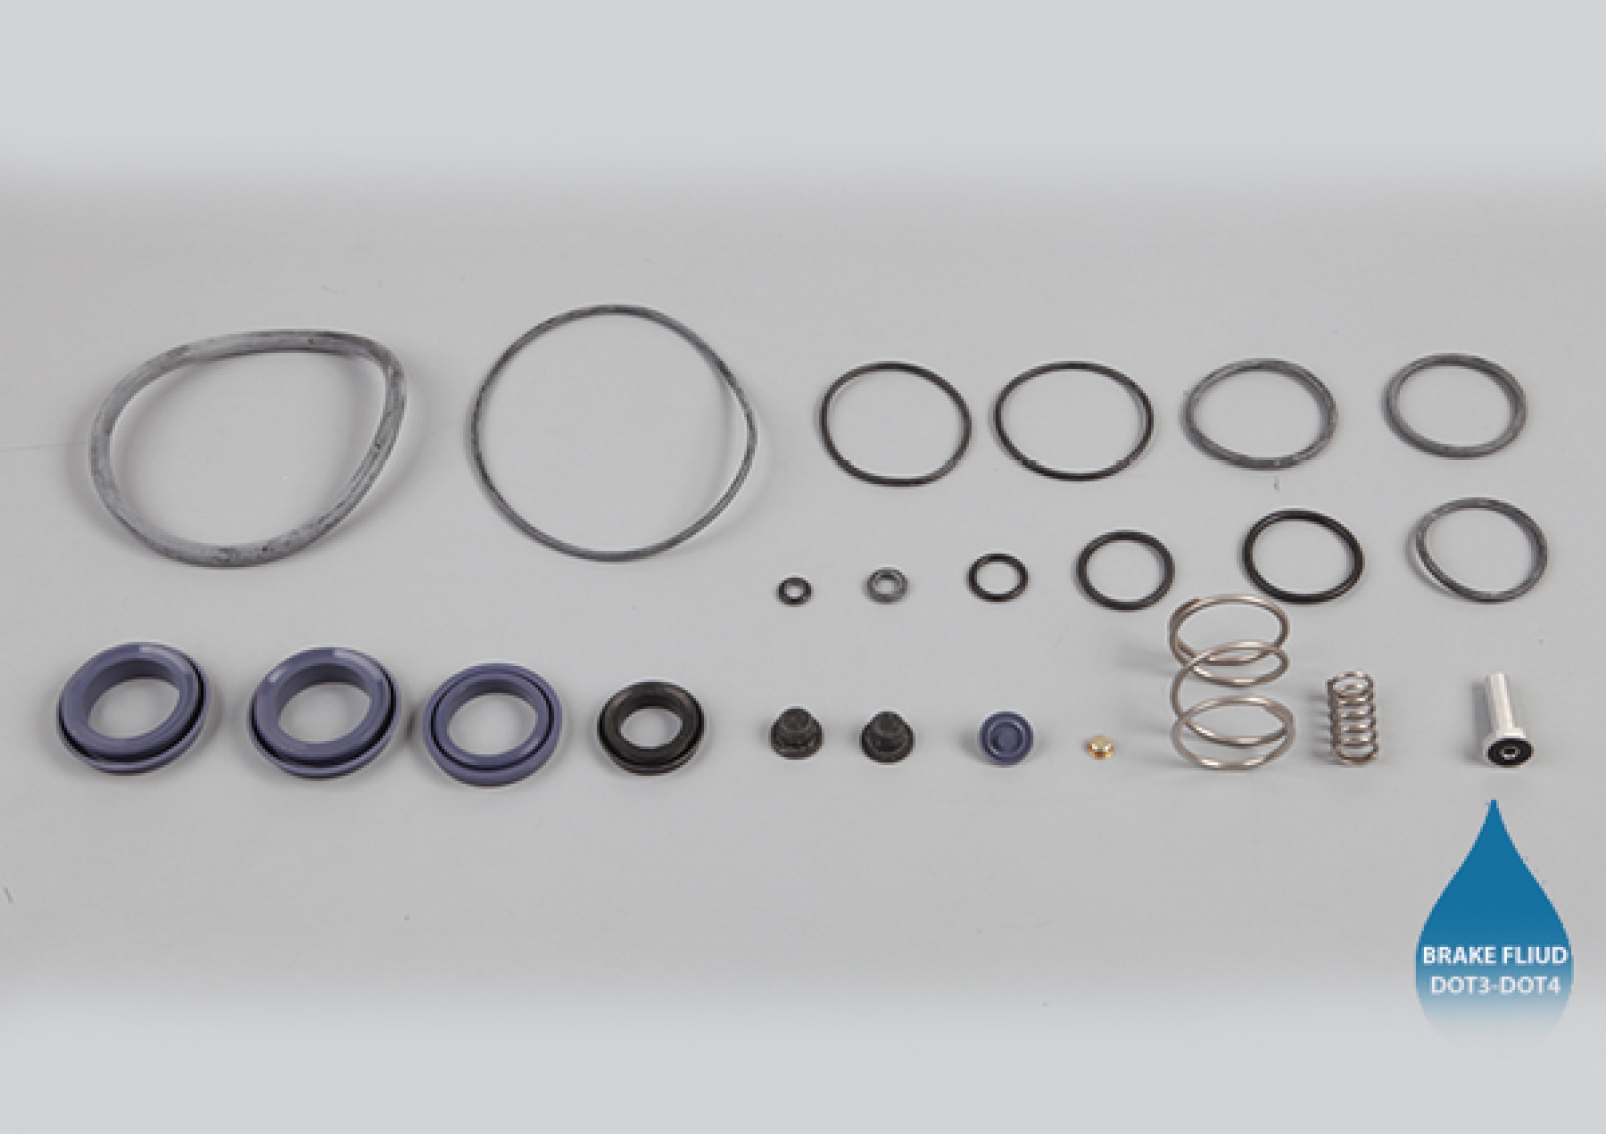 Clutch Servo Repair Kit for Mercedes Benz Axor, Actros,  321 027 001, 321027001